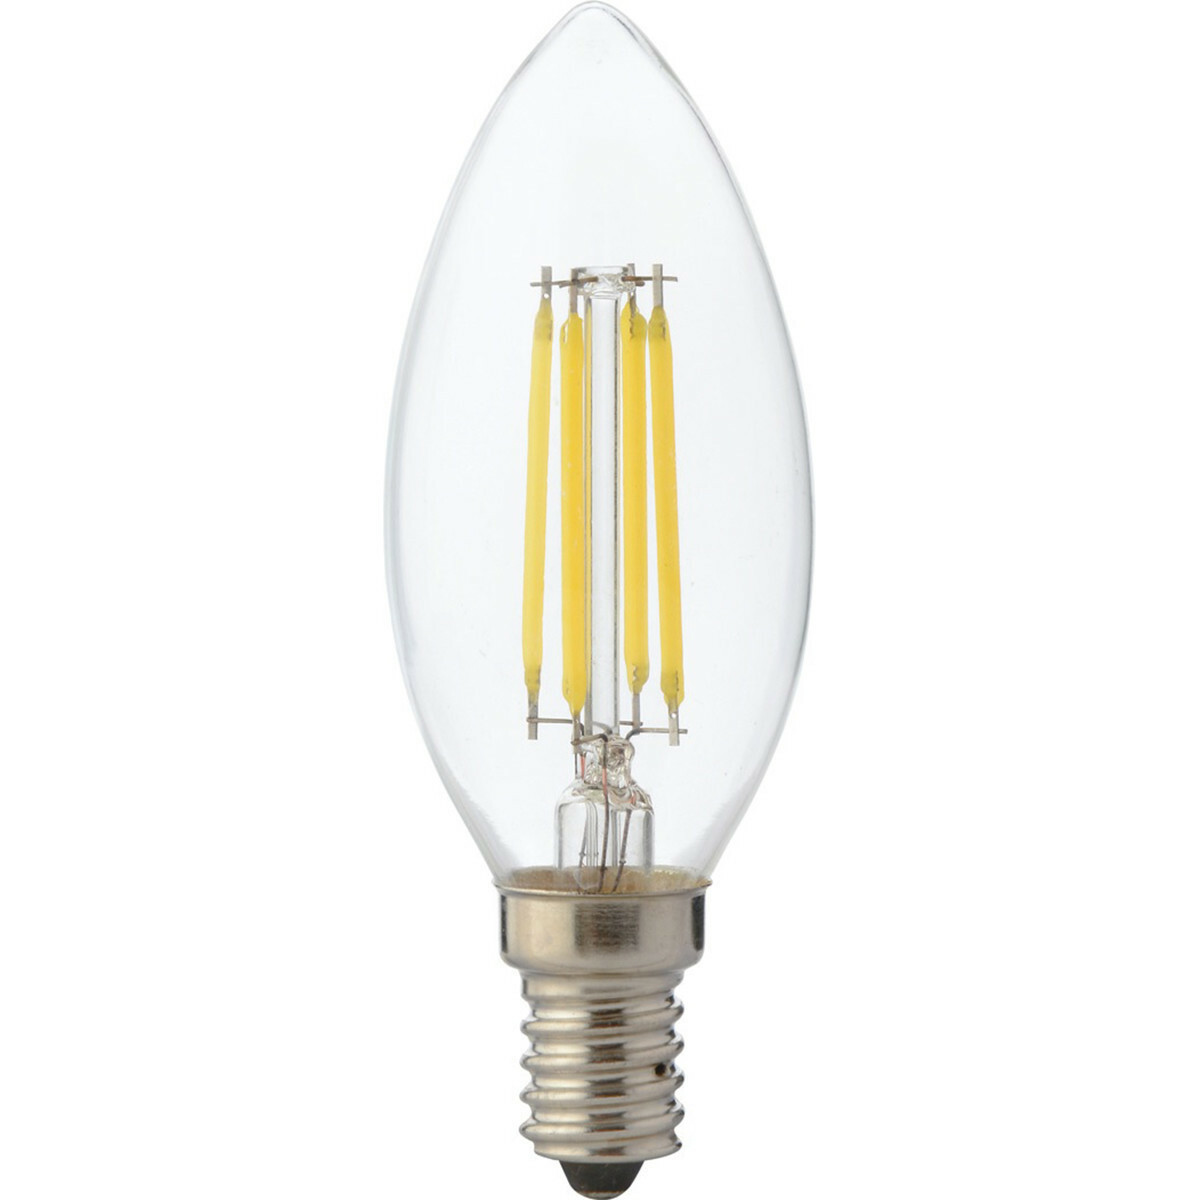 Odysseus het is mooi dialect LED Lamp - Kaarslamp - Filament - E14 Fitting - 6W Dimbaar - Warm Wit 2700K  | BES LED